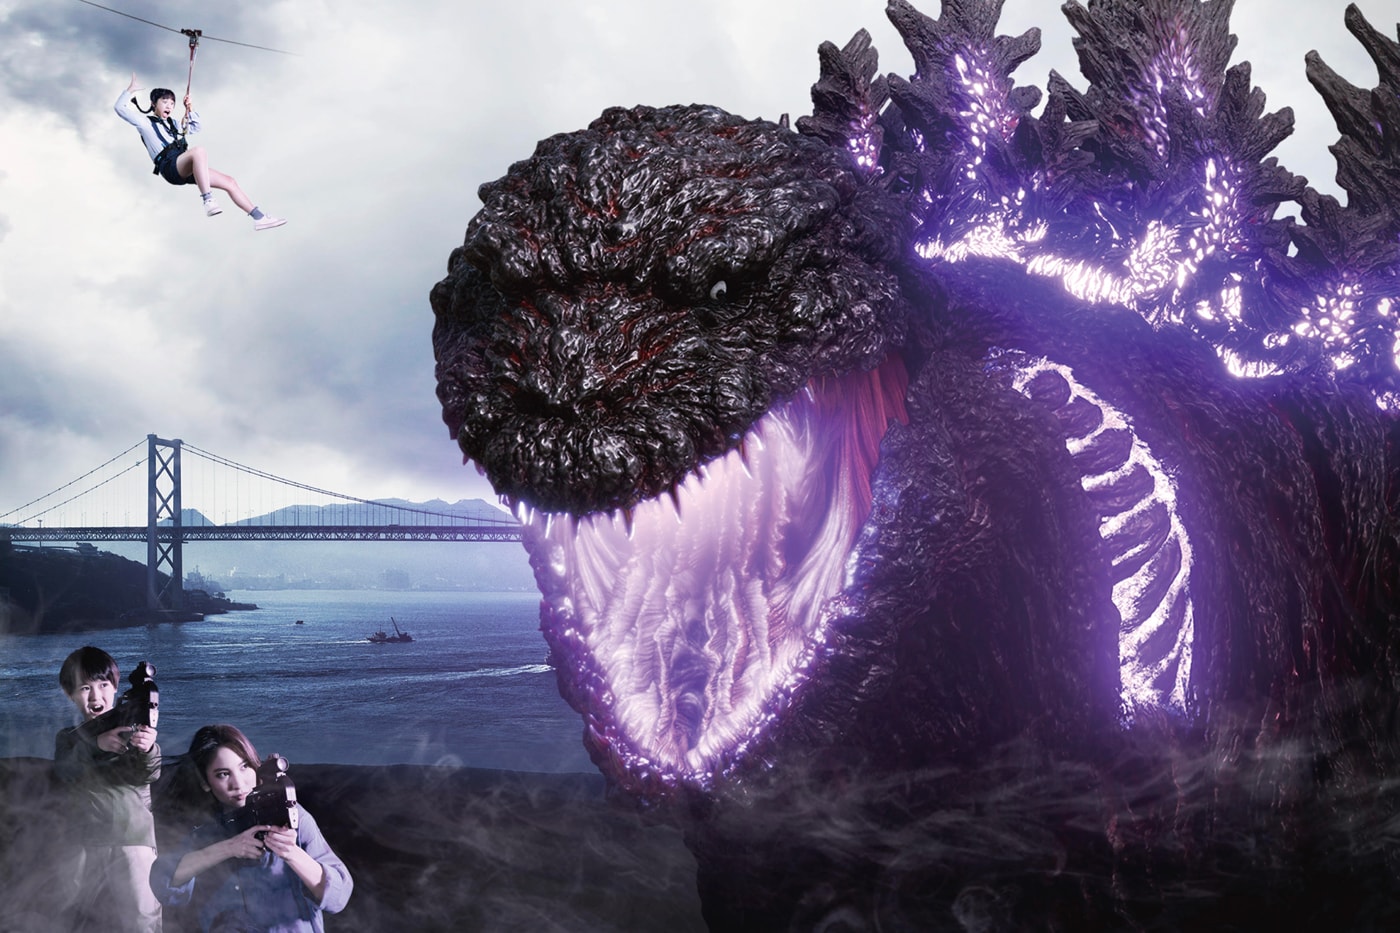 Nijigen no Mori Park Officially Unveils Its Life-Sized Godzilla Awaji Island Japan Kaiju zip line attraction cartoon manga anime pop-culture 